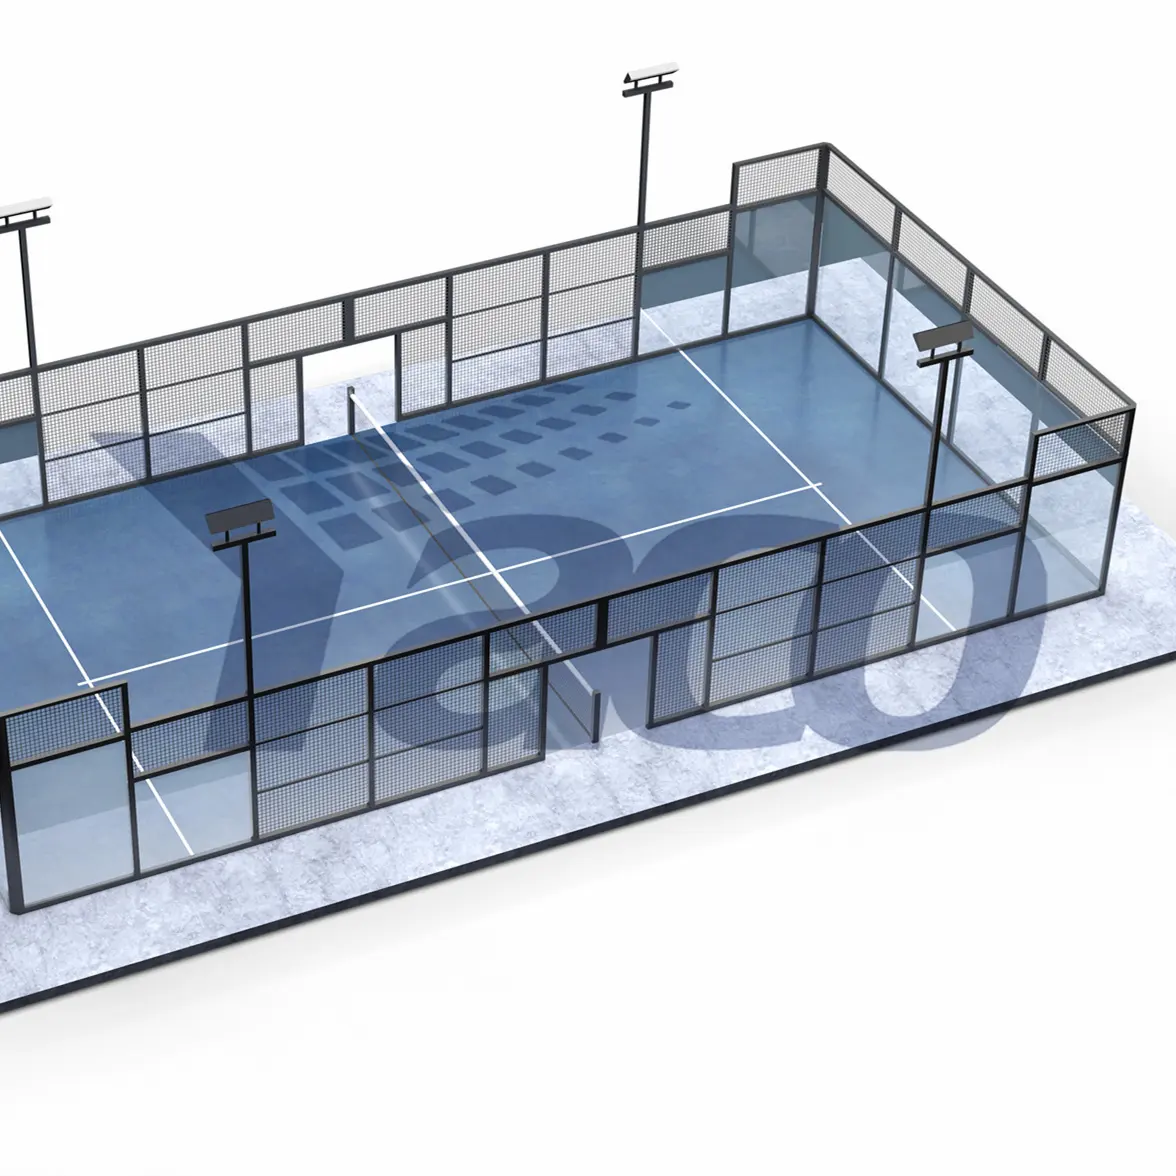 Padel Turf Sports Application Cancha de padel standard panoramic artificial turf padel court